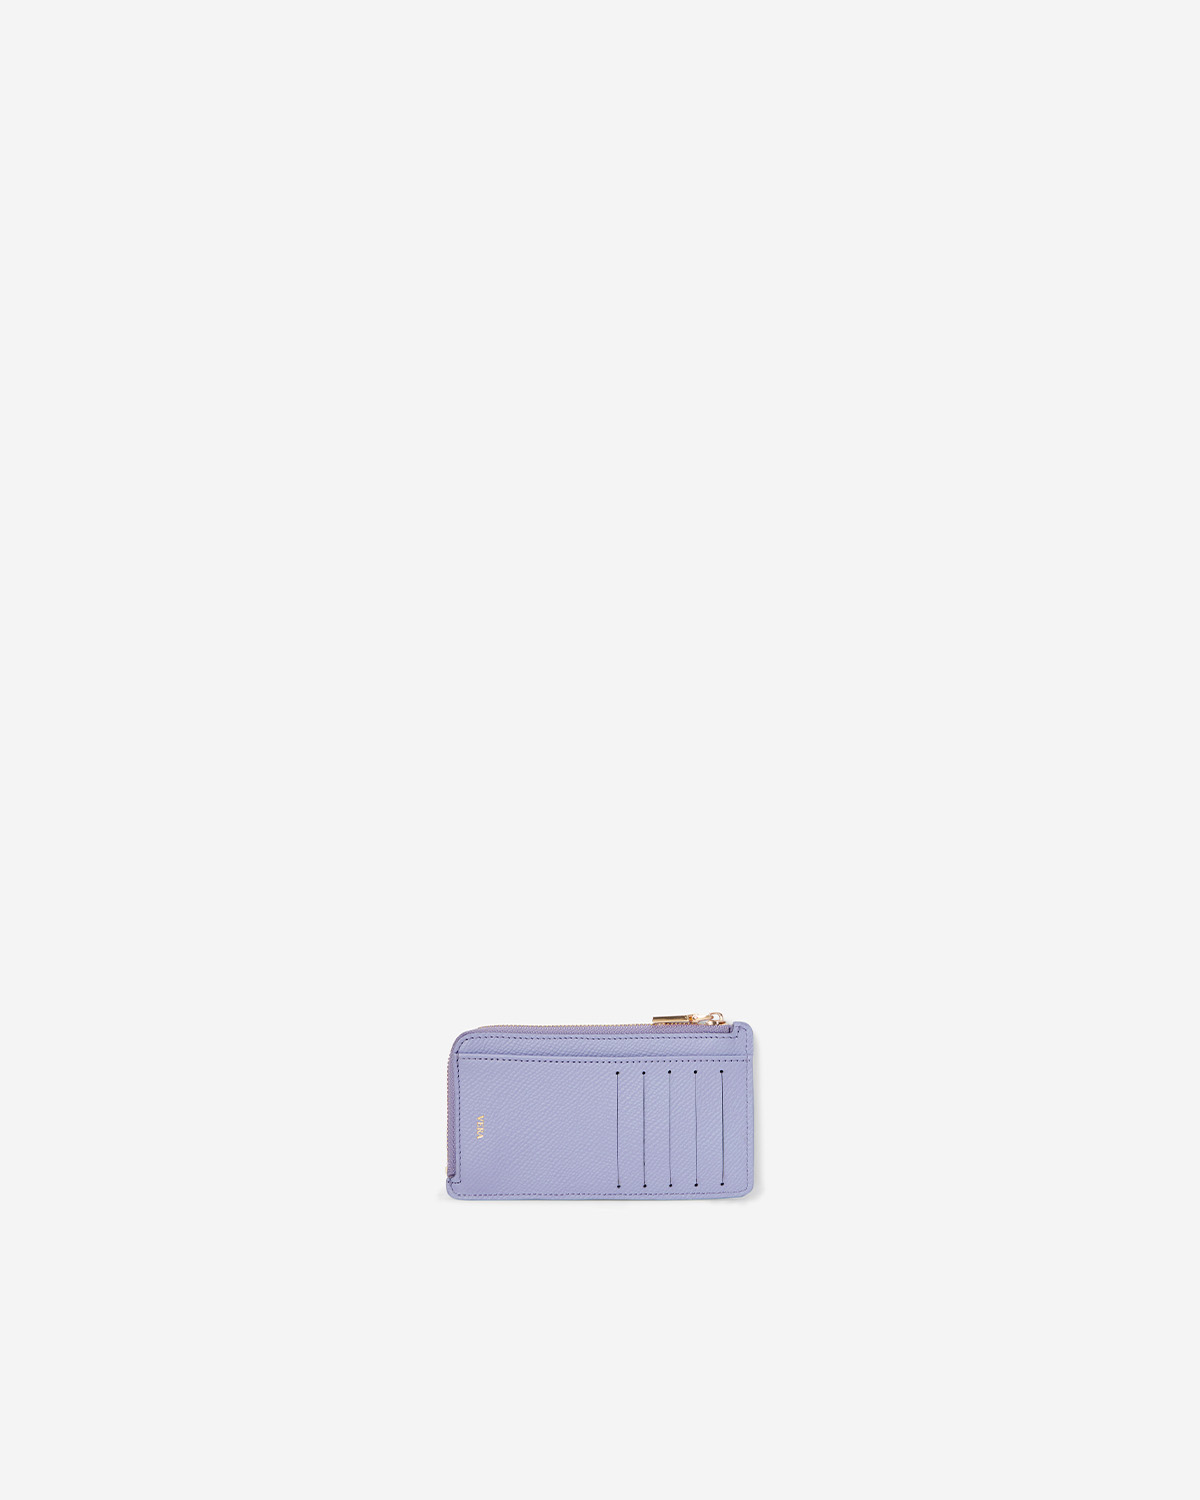 VERA Emily Long Card holder in Charming Purple กระเป๋าใส่บัตรหนังแท้ ทรงยาว พร้อมช่องซิบ สีม่วง